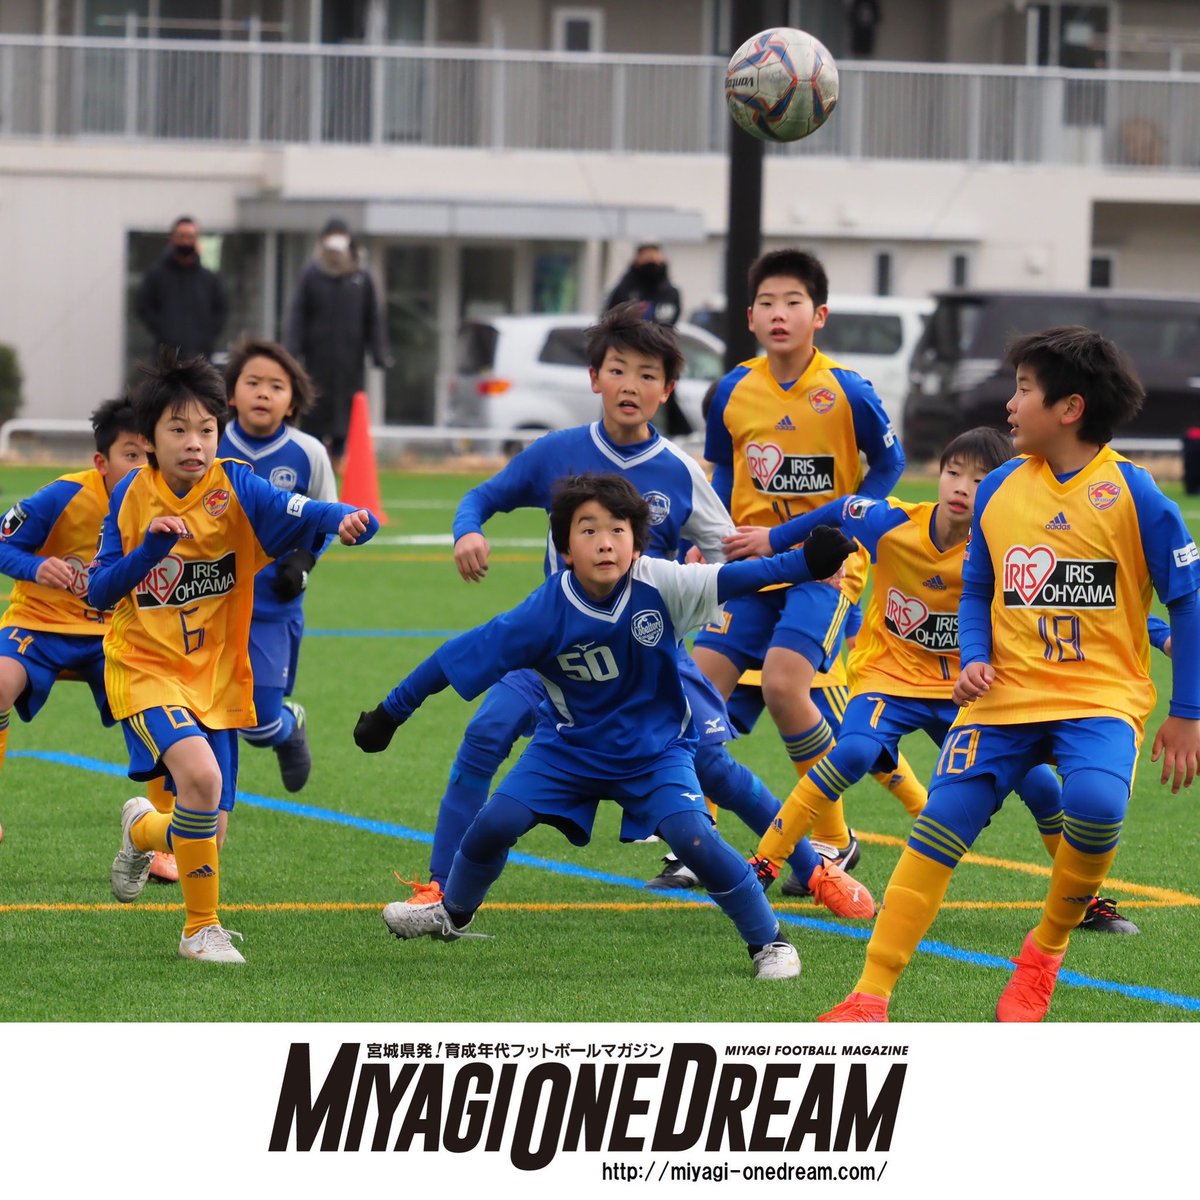 Miyagi One Dream 宮城県内の小学生5年生チームが繰り広げるハイレベルなリーグ戦 プレミアリーグu 11宮城 を取材させていただきました T Co Xg0ij5nzsw